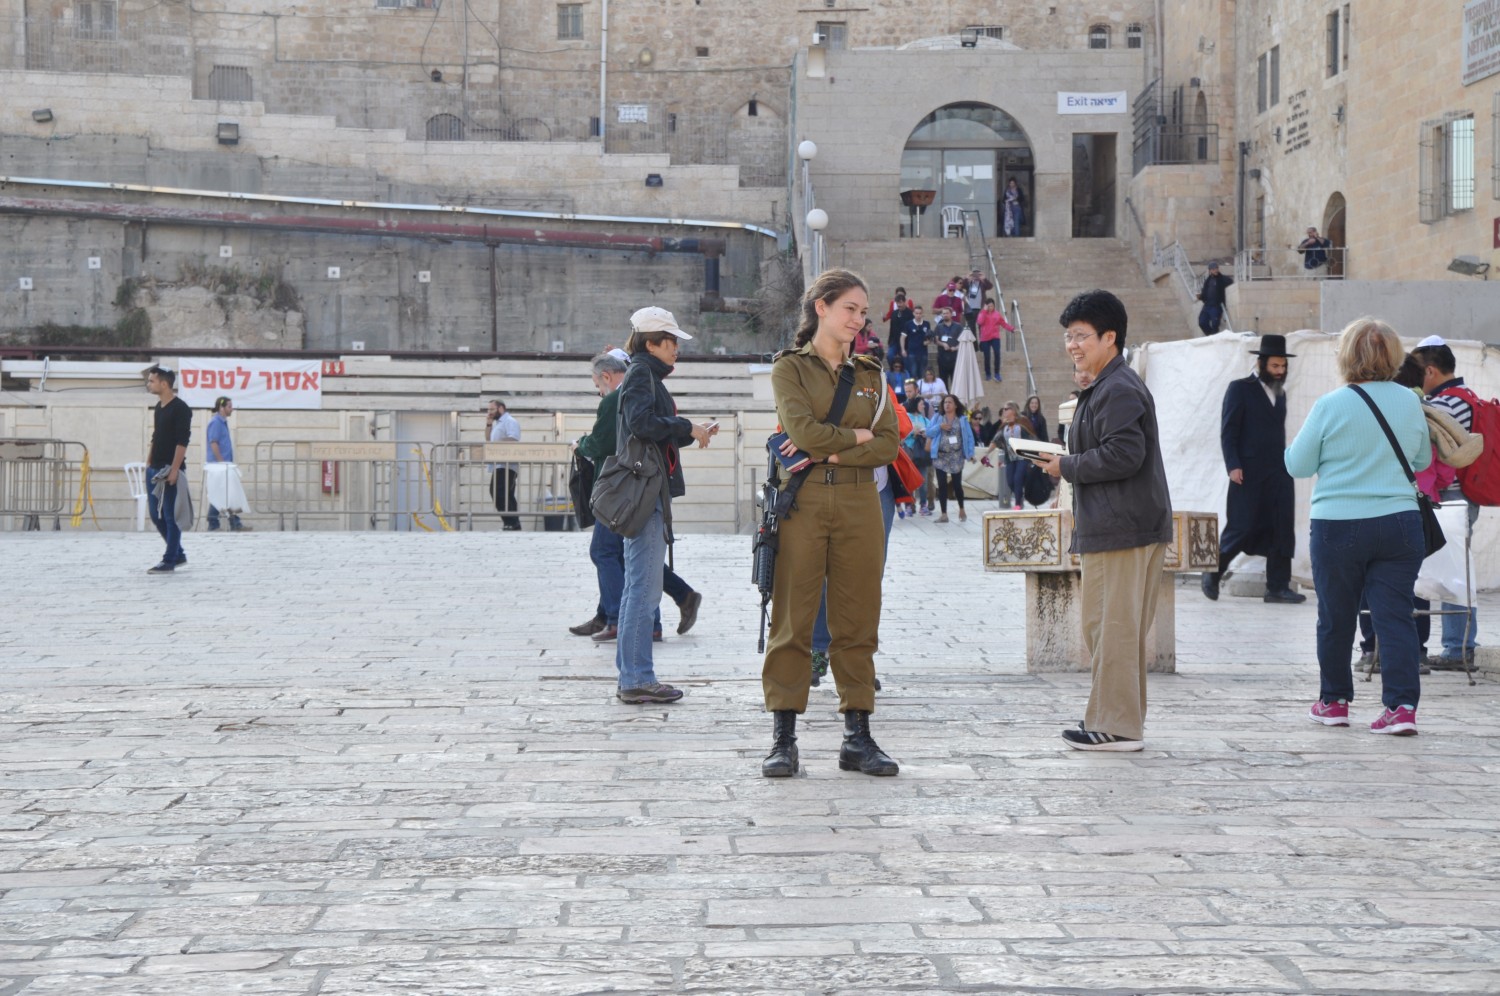 Girl with machine gun in Jerusalem